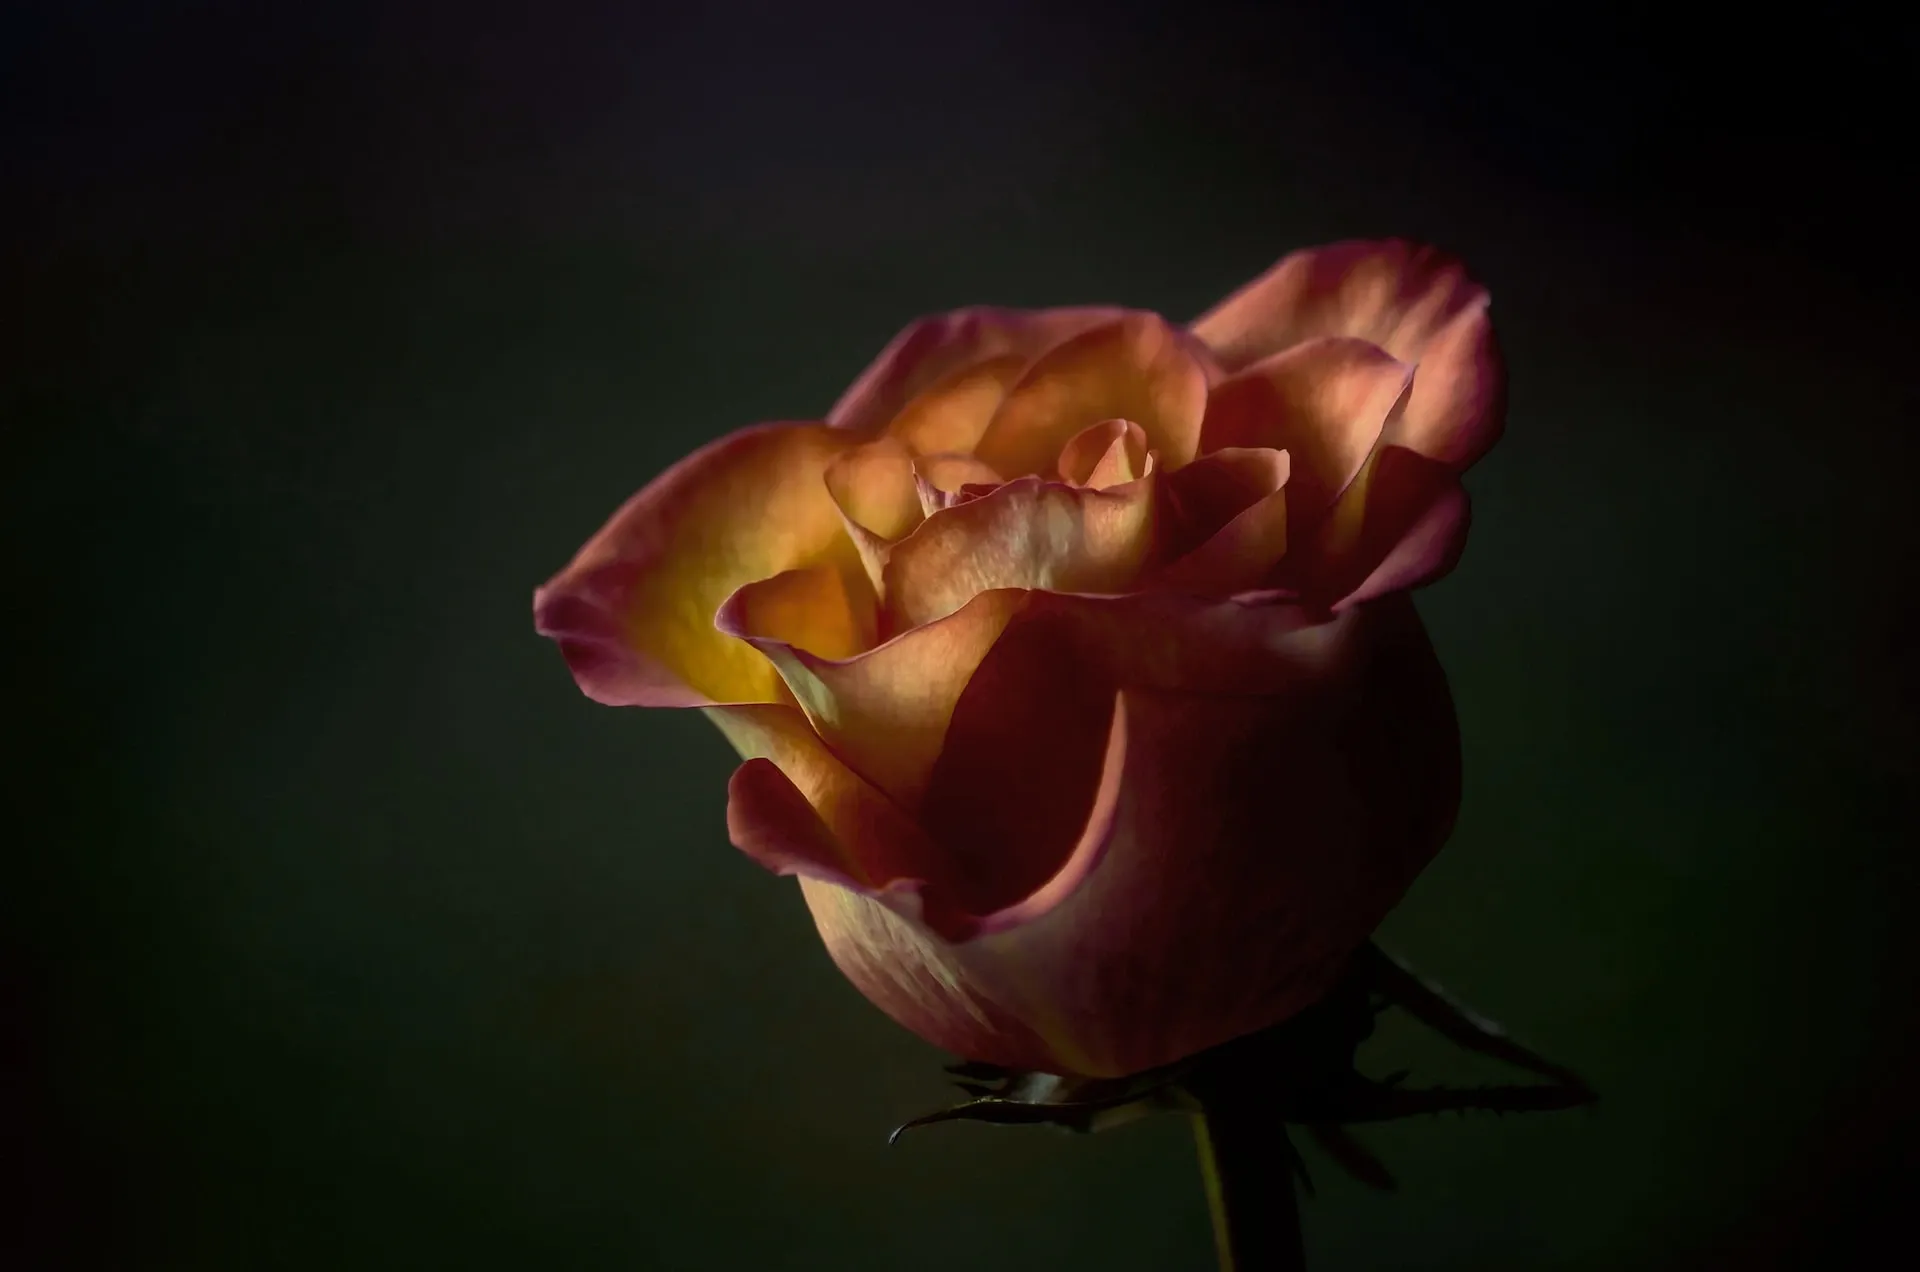 Chiaroscuro lighting on a flower